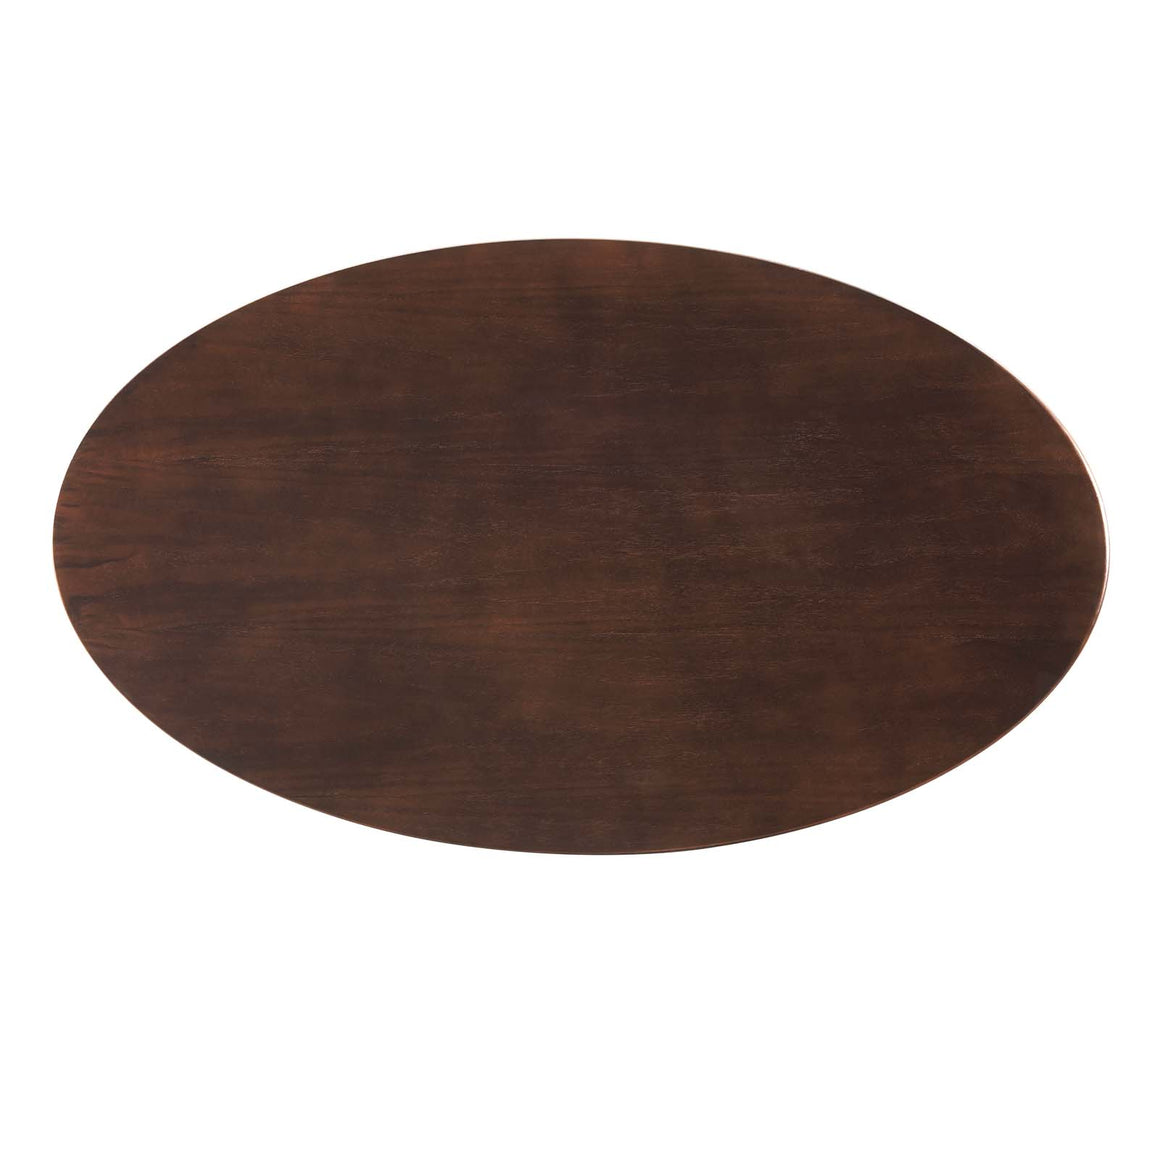 Lippa 48" Oval Coffee Table